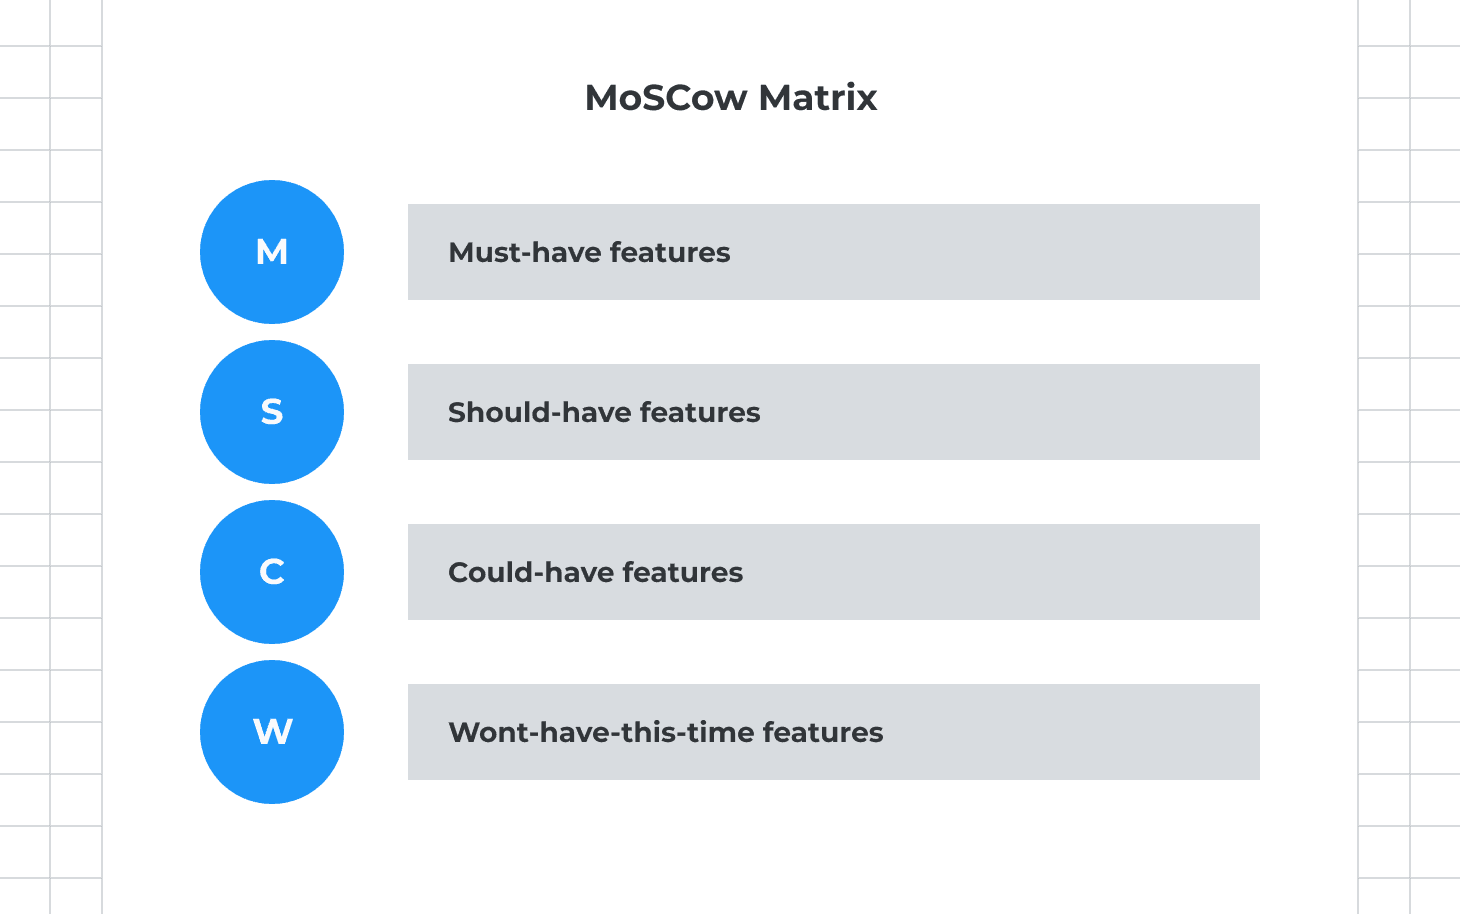 MoSCow Matrix